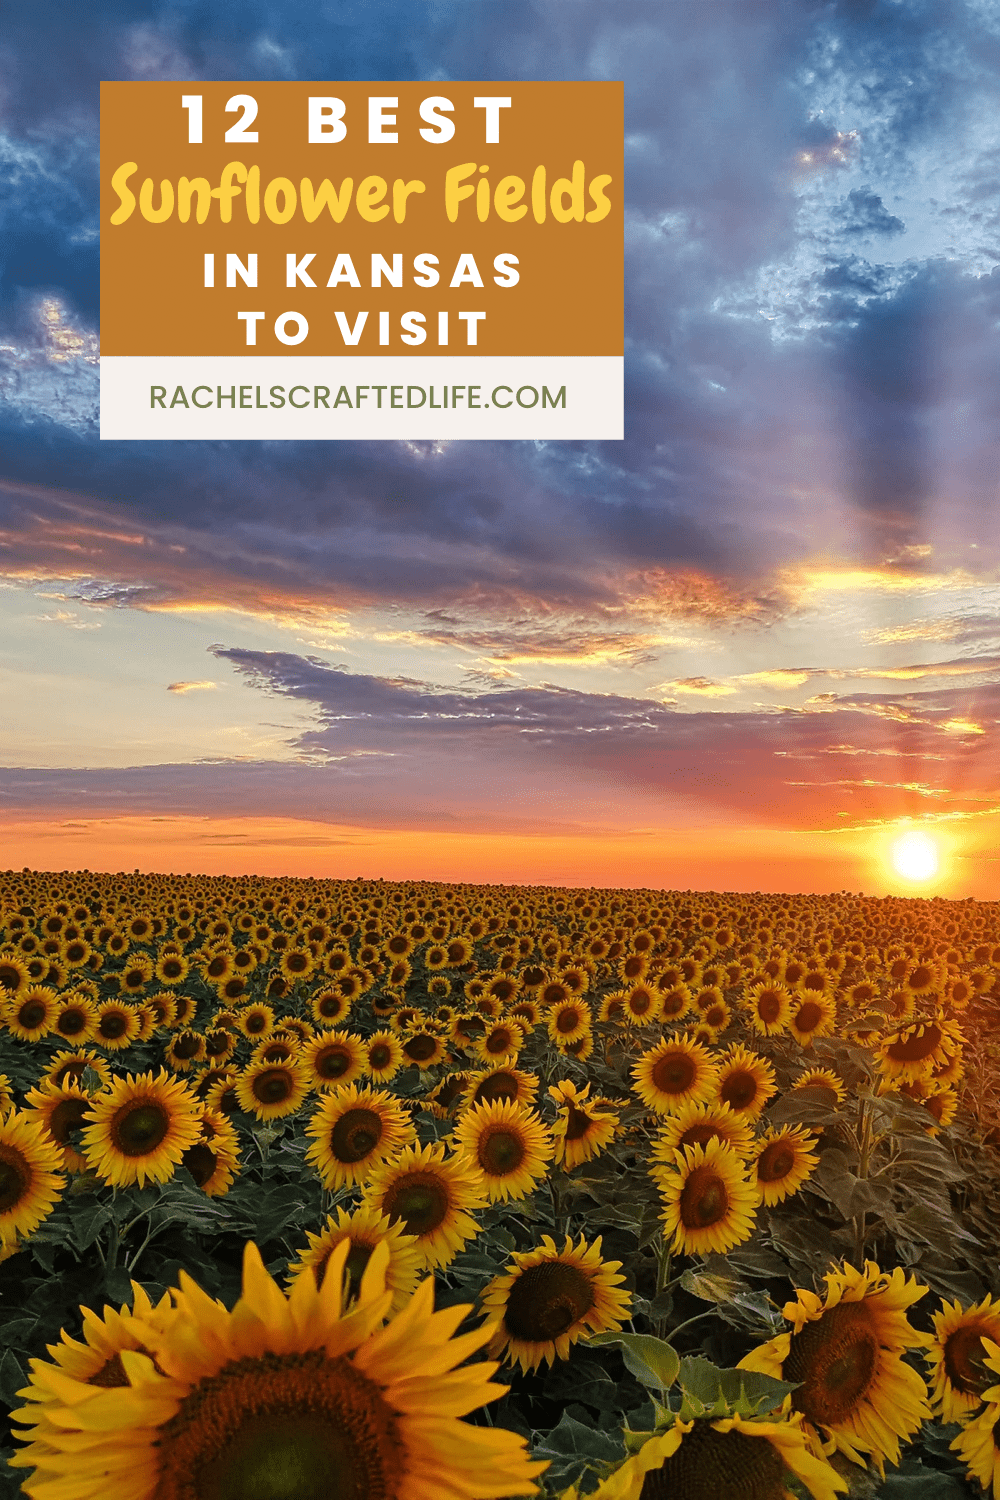 12 Best Sunflower Fields in Kansas to Visit Rachel's Crafted Life